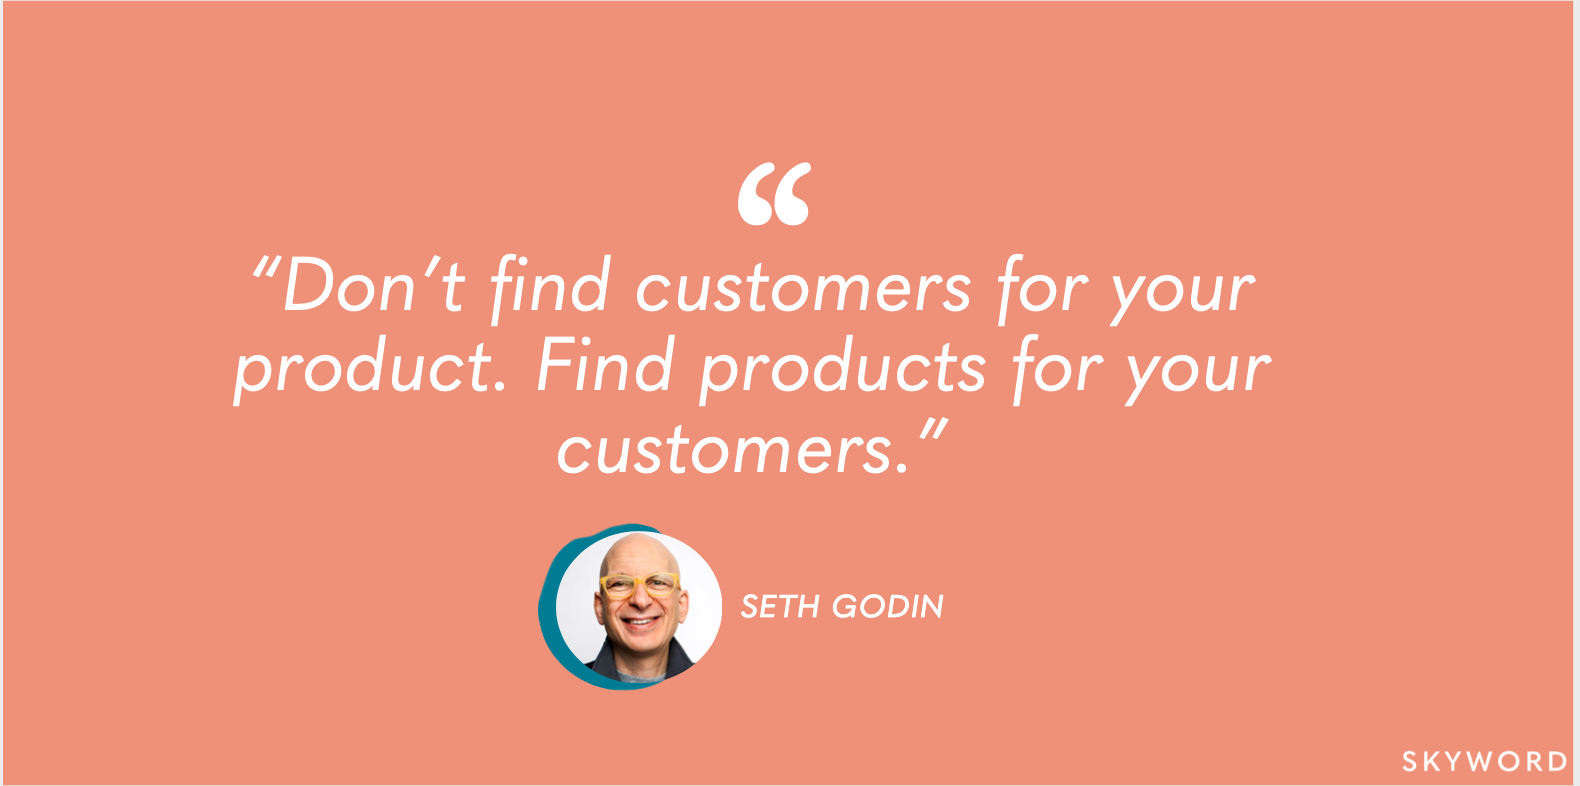 seth godin customer-centric marketing quote